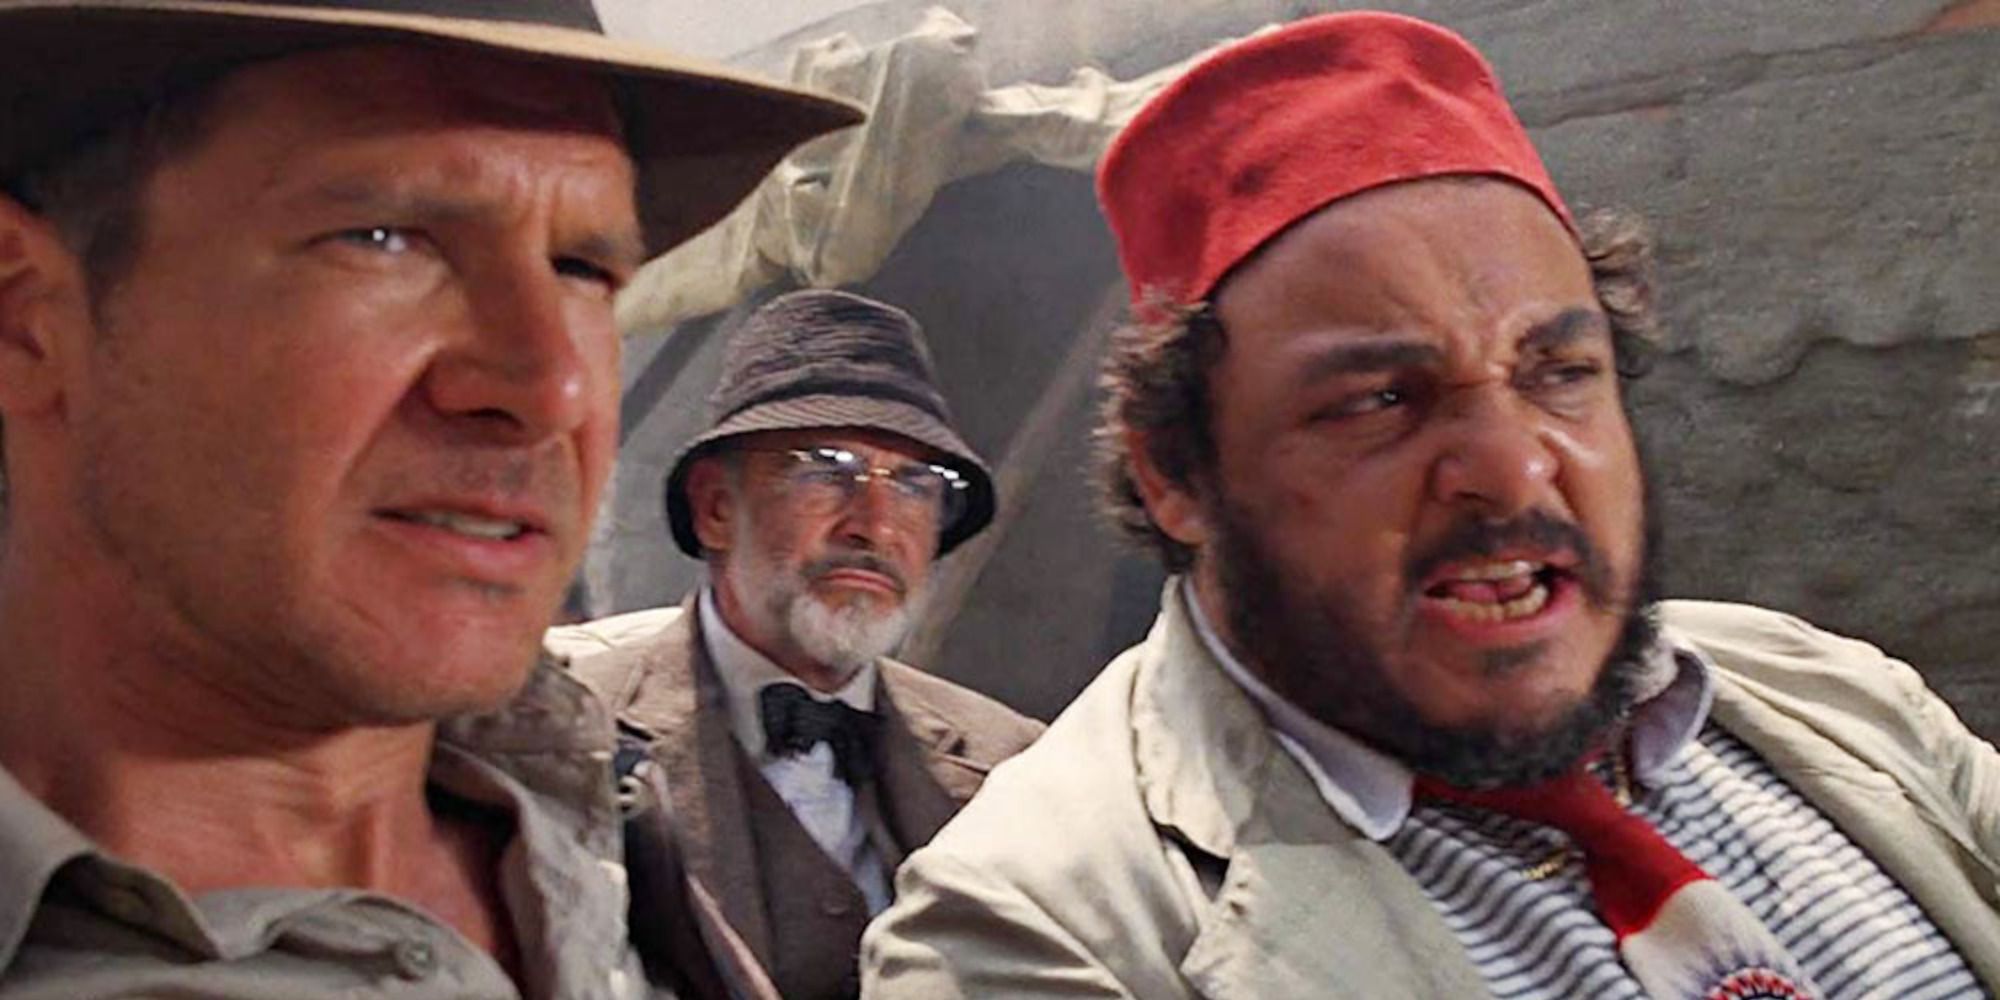 Sallah Indiana Jones and the Last Crusade header